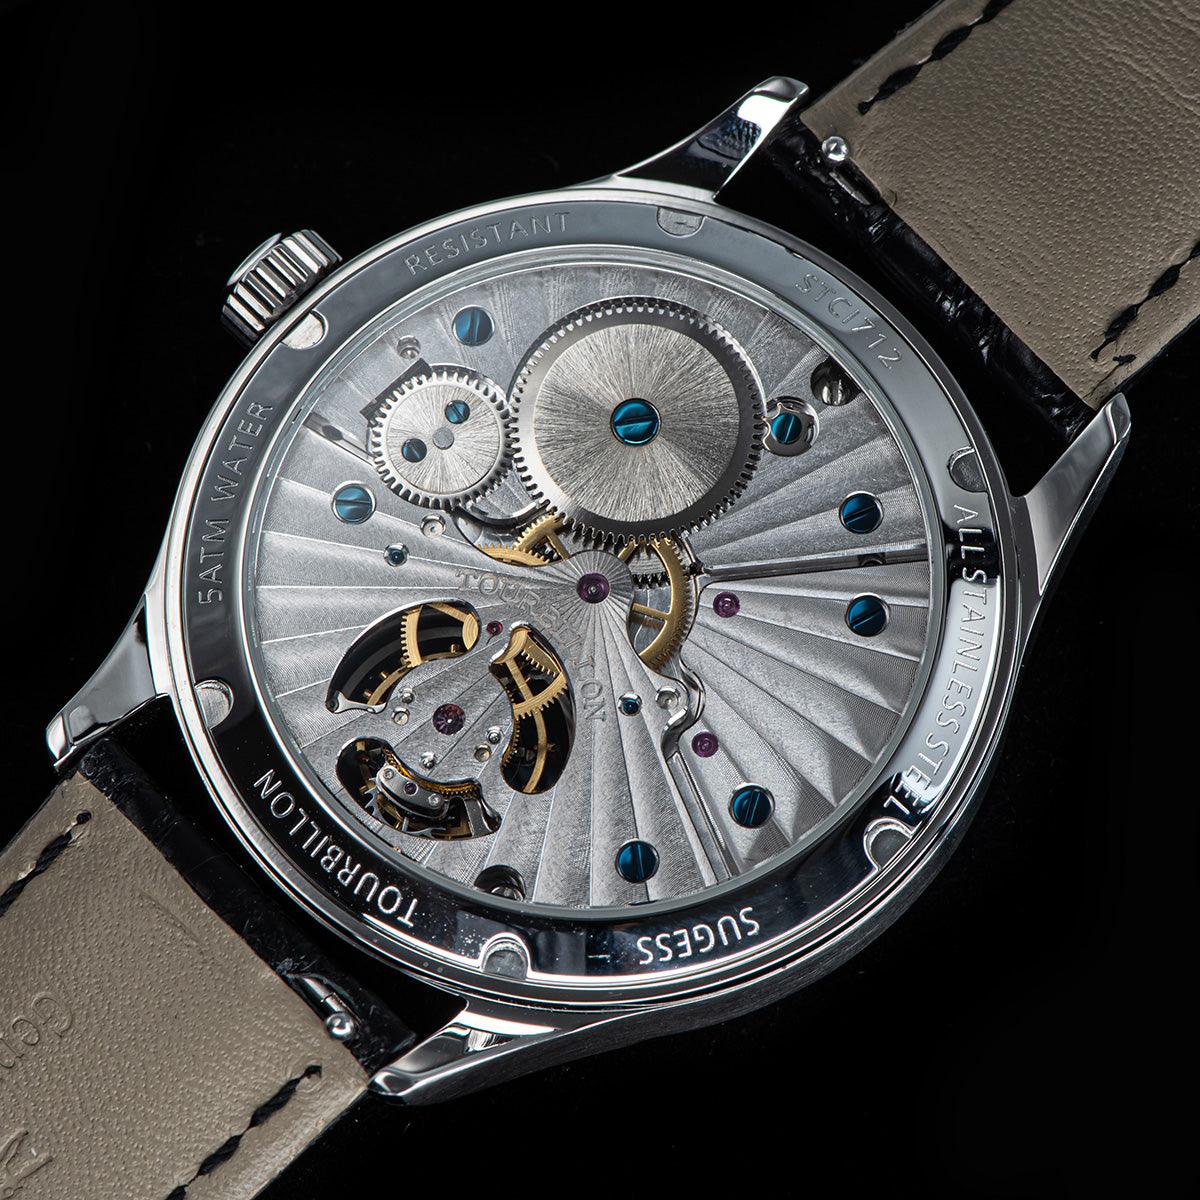 Sugess Seagull's tourbillon movement multifunctional mechanical men's watch 8230 fashion men's watch business waterproof - Murphy Johnson Watches Co.